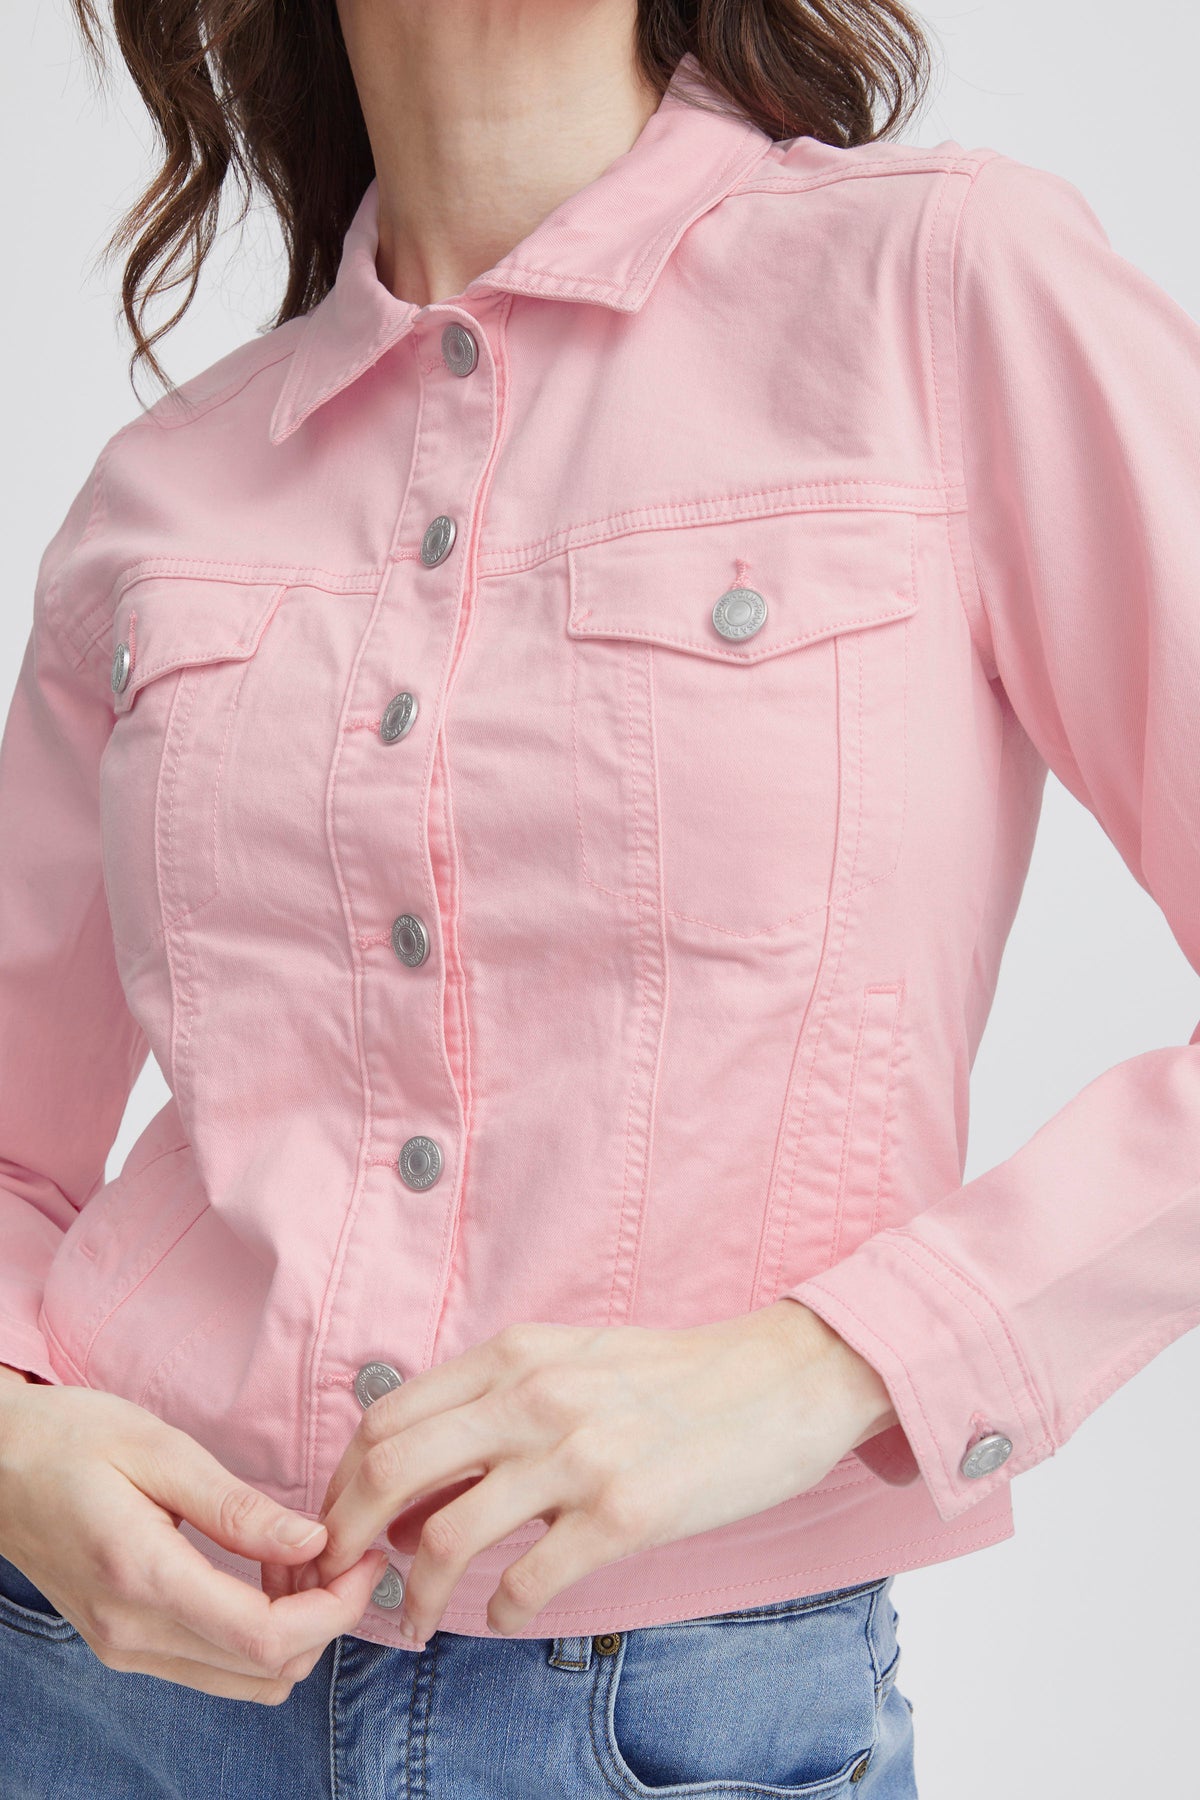 Fransa Frvotwill Pink Frosting Soft Denim Jacket, 20609189